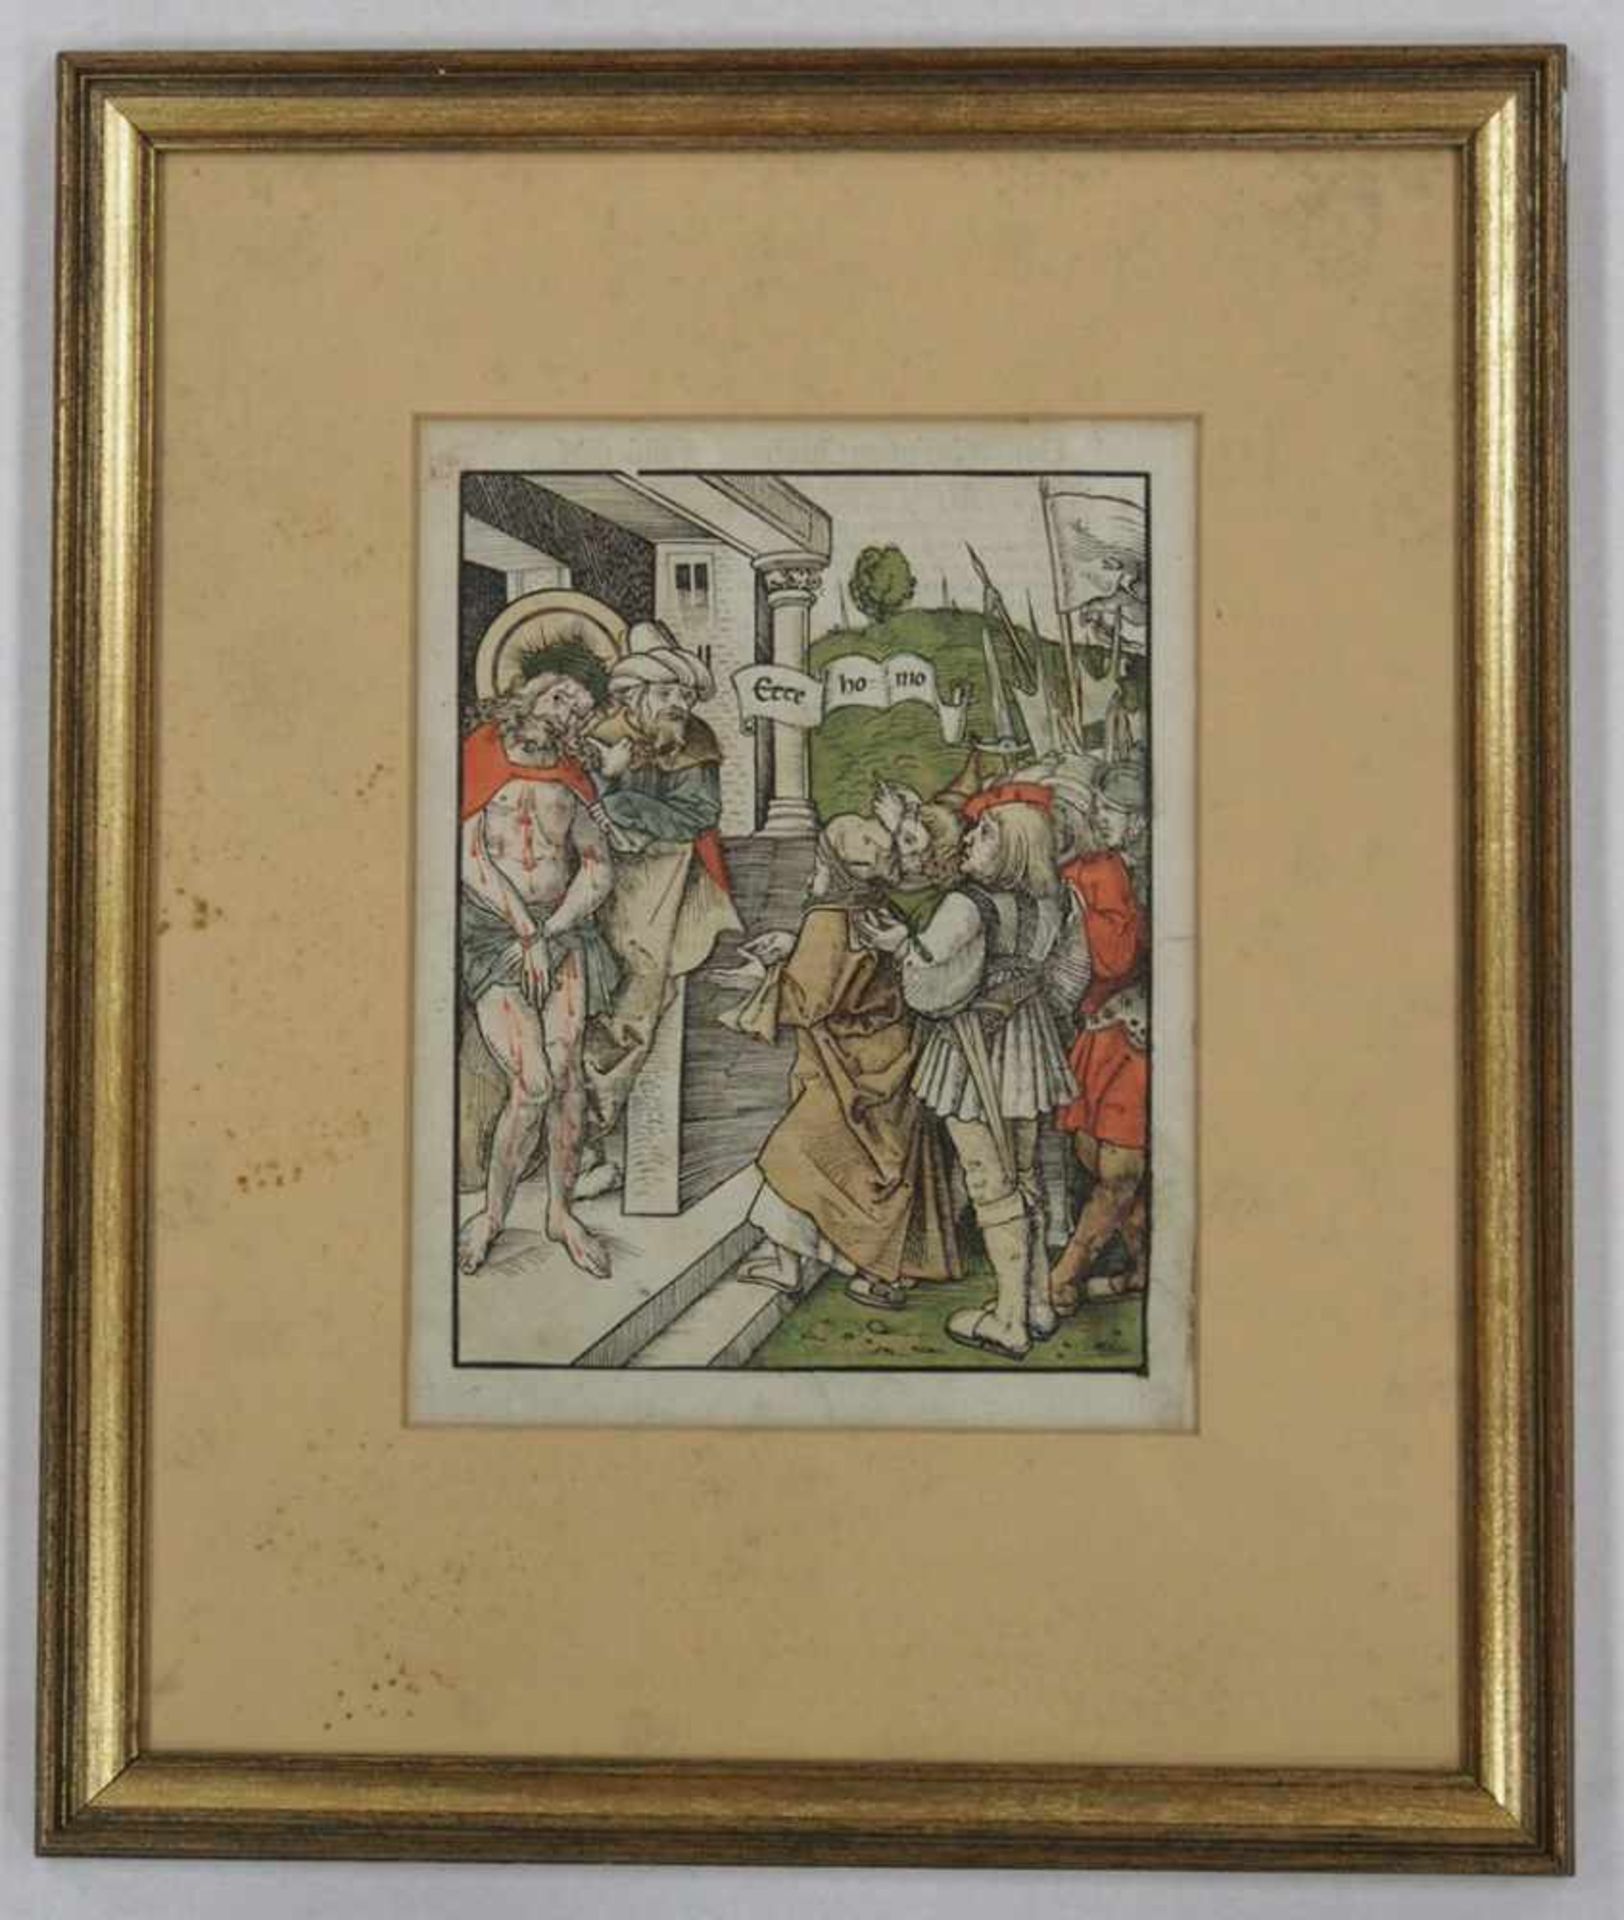 WECHTLIN, Hans1480-1520Ecce HomoHolzschnitt, altkoloriert, Straßburg 1508, 24 x 18,5 cm, gerahmt - Image 2 of 2